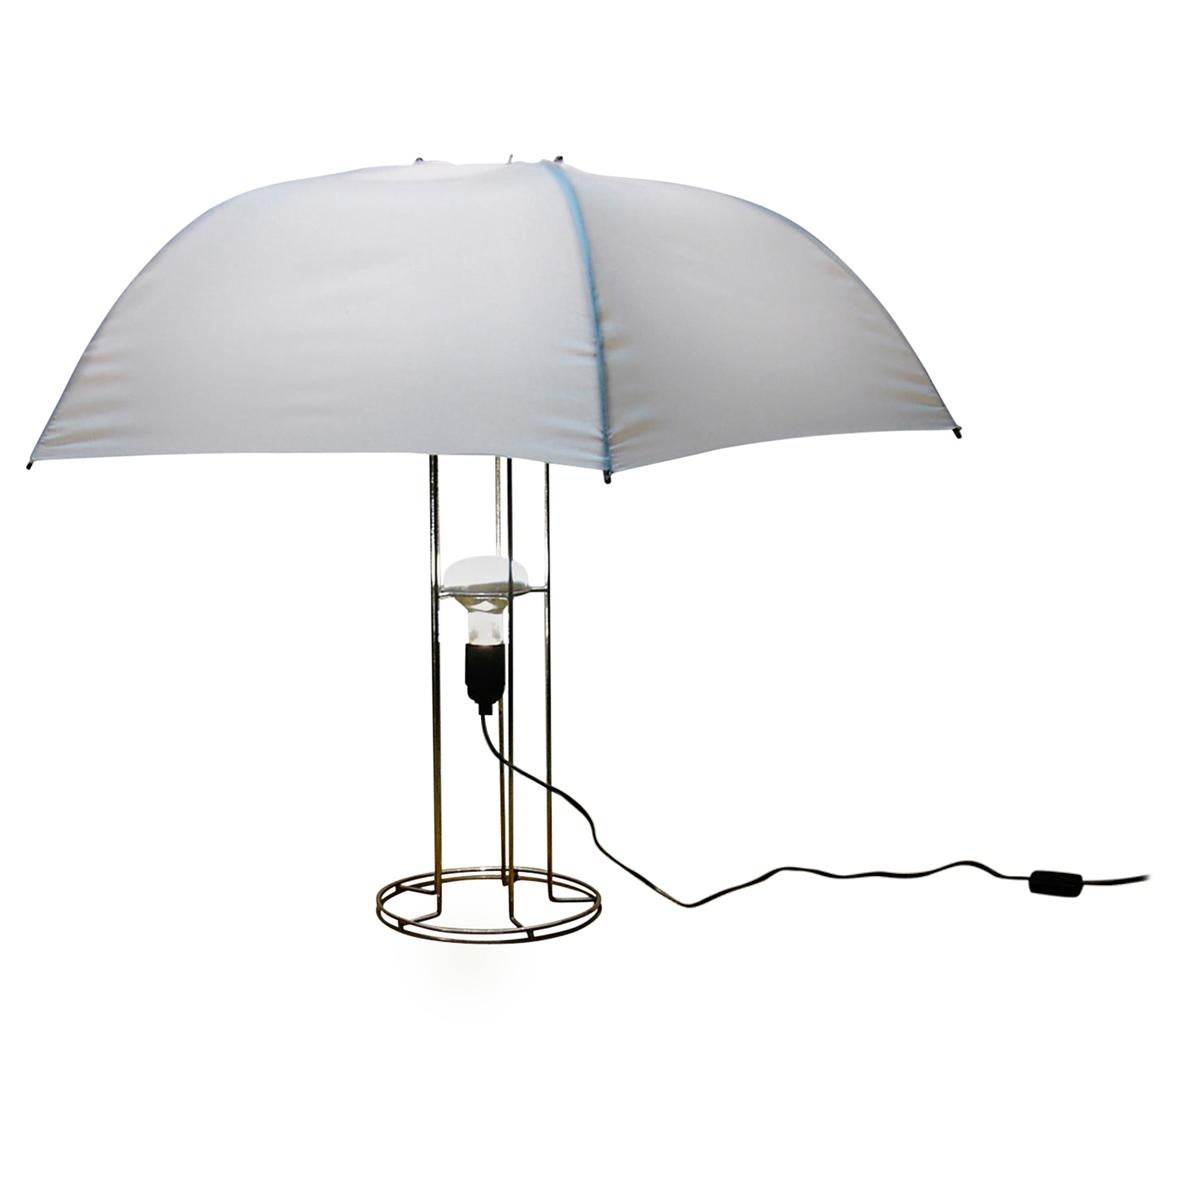 Gijs Bakker ‘Umbrella’ Lamp Midcentury Droog Design, 1970s For Sale